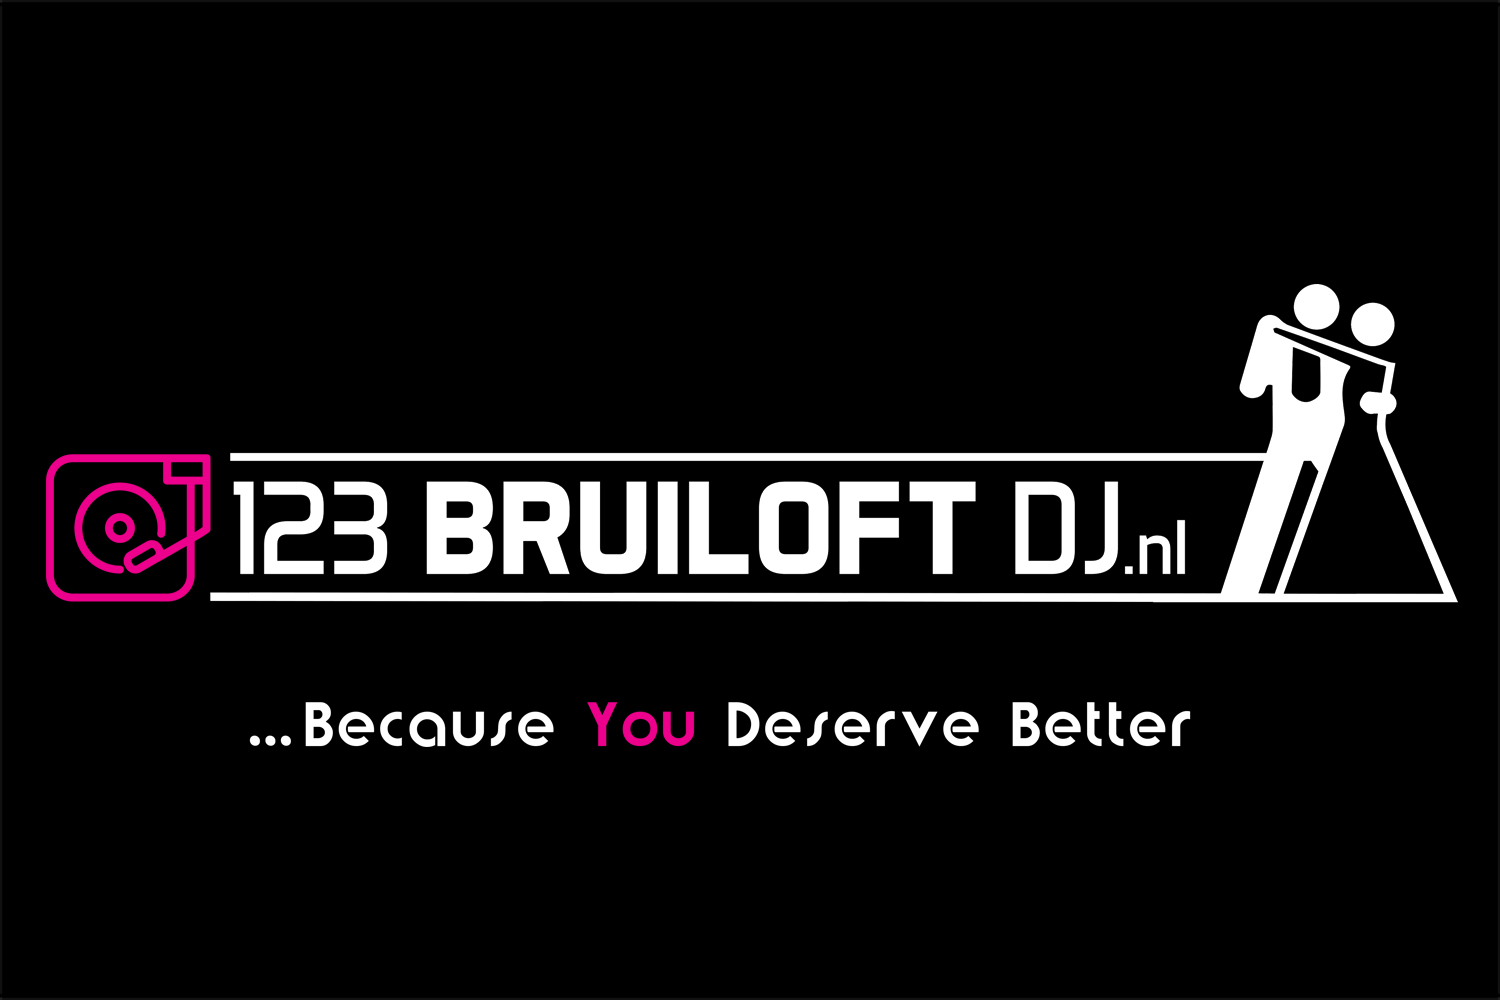 123 Bruiloft DJ.nl